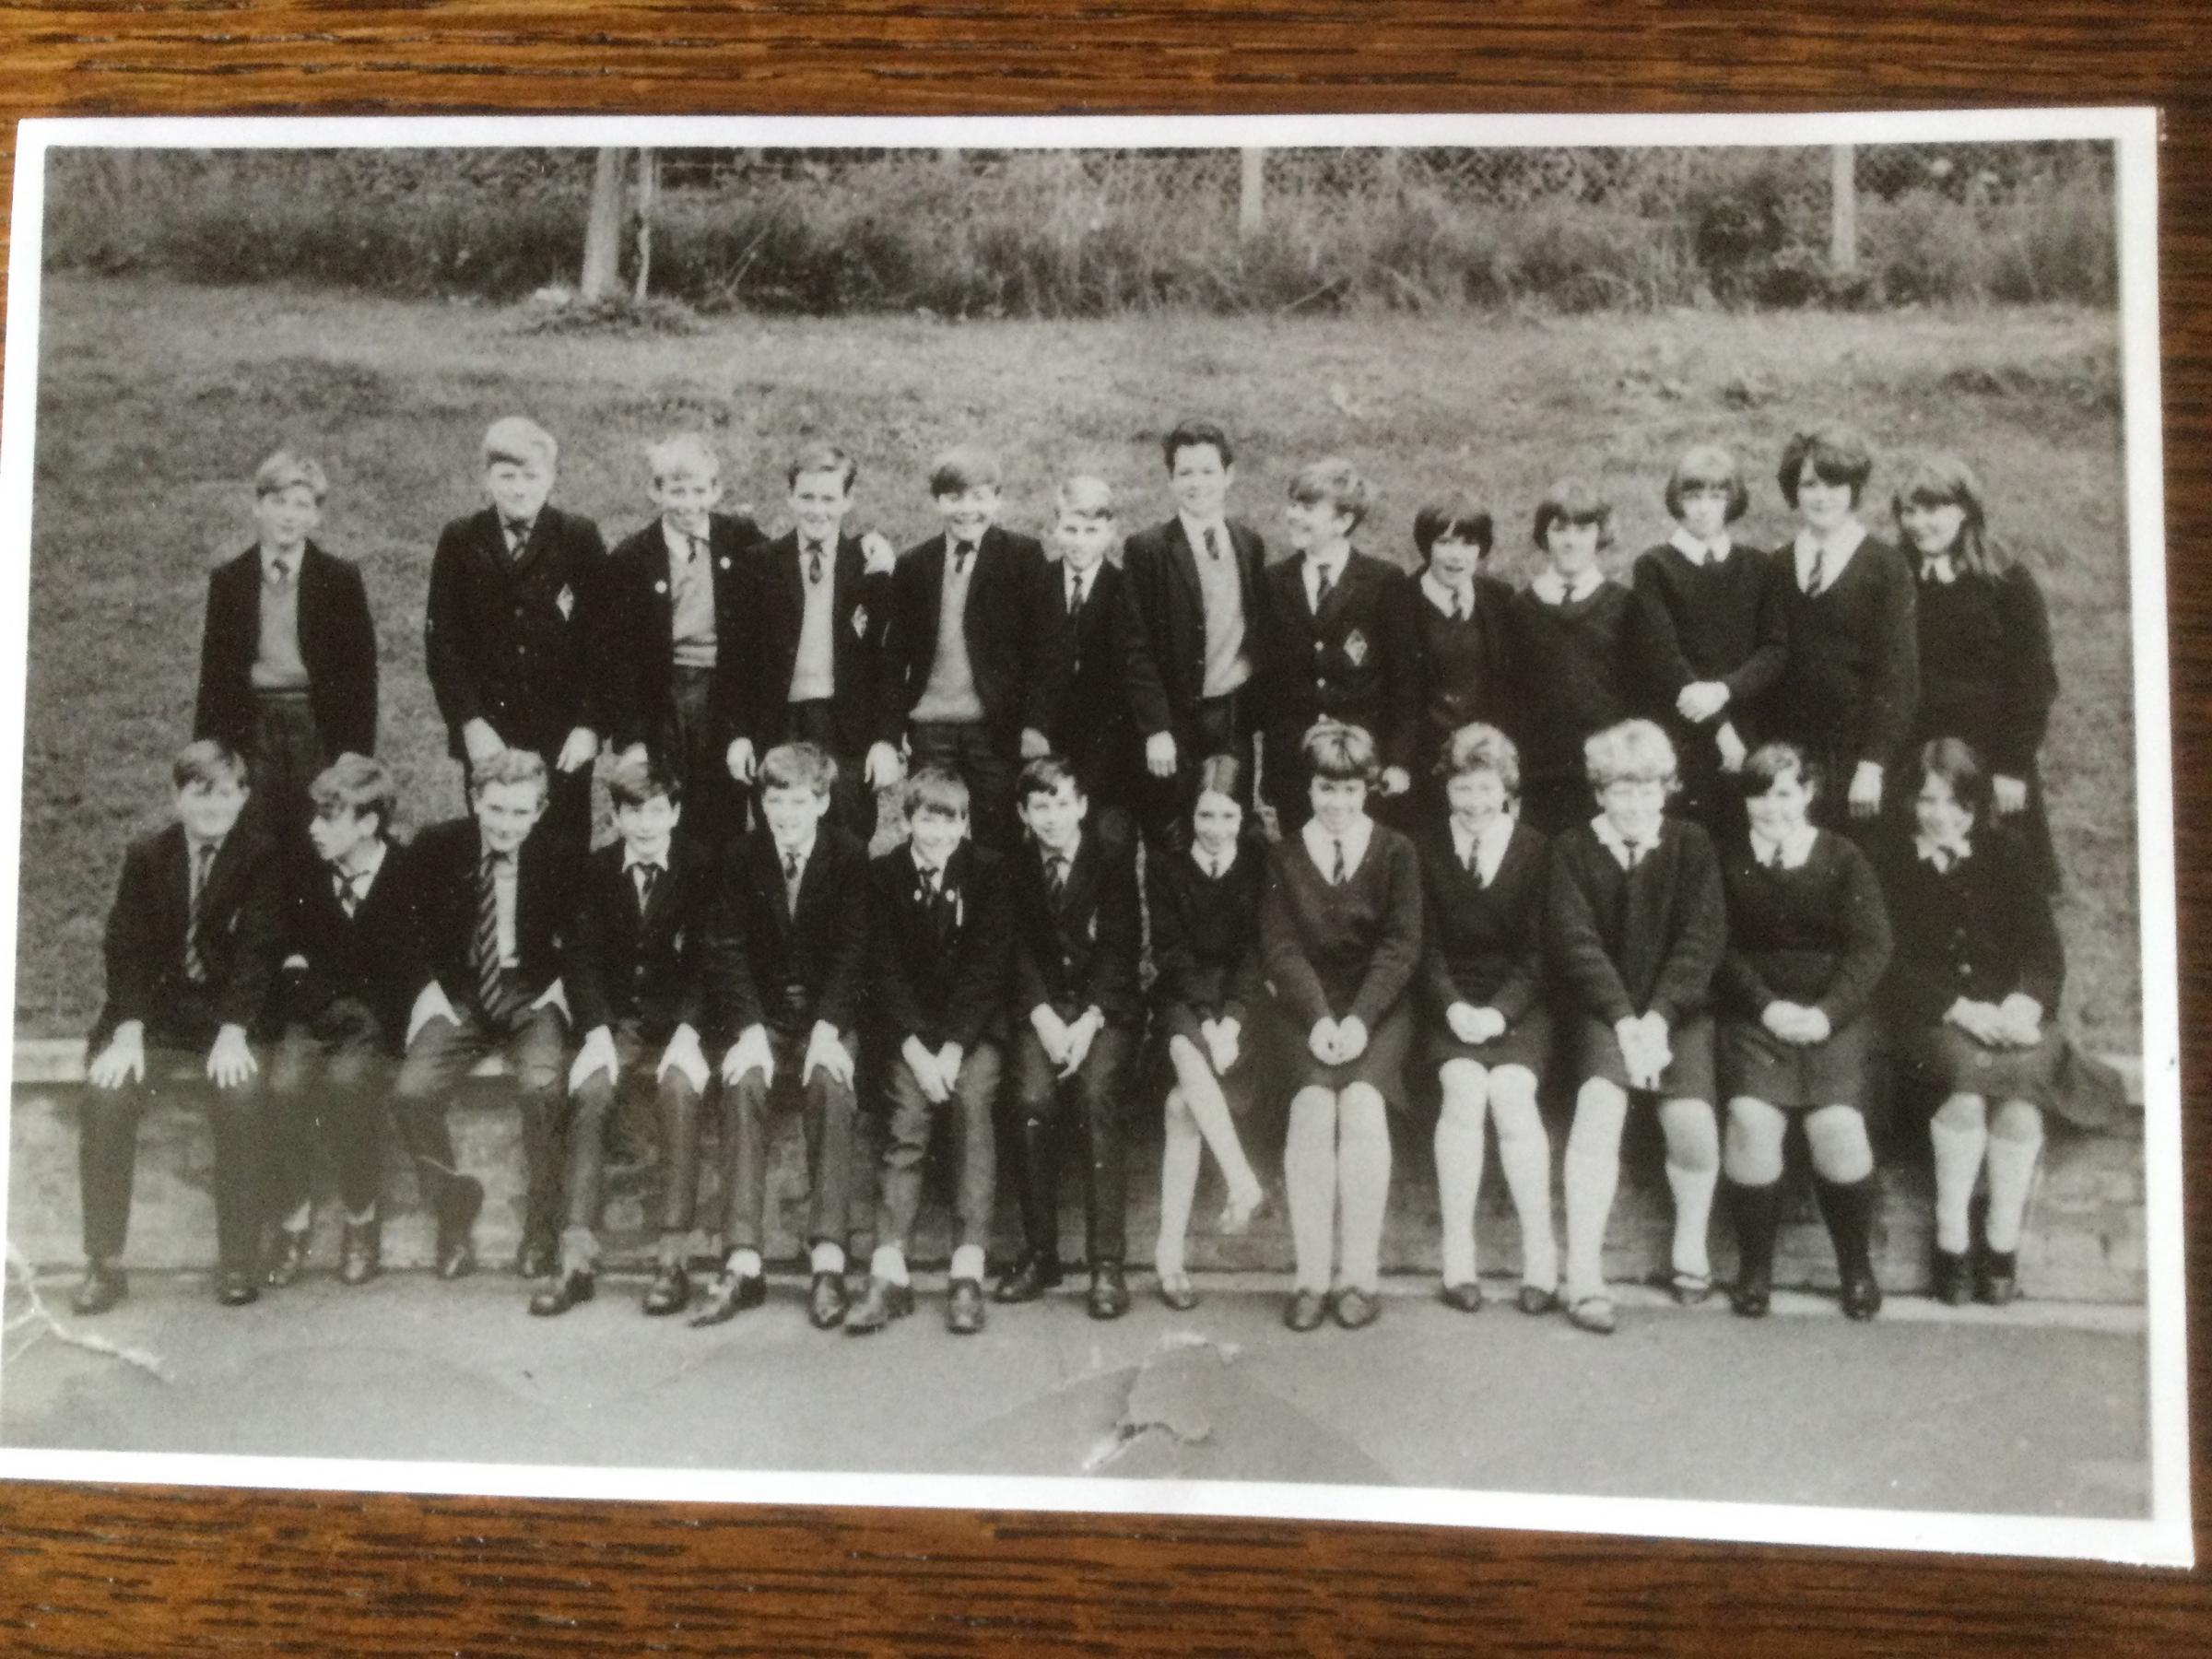 The class of 66 from Lady Hawkins School in Kington